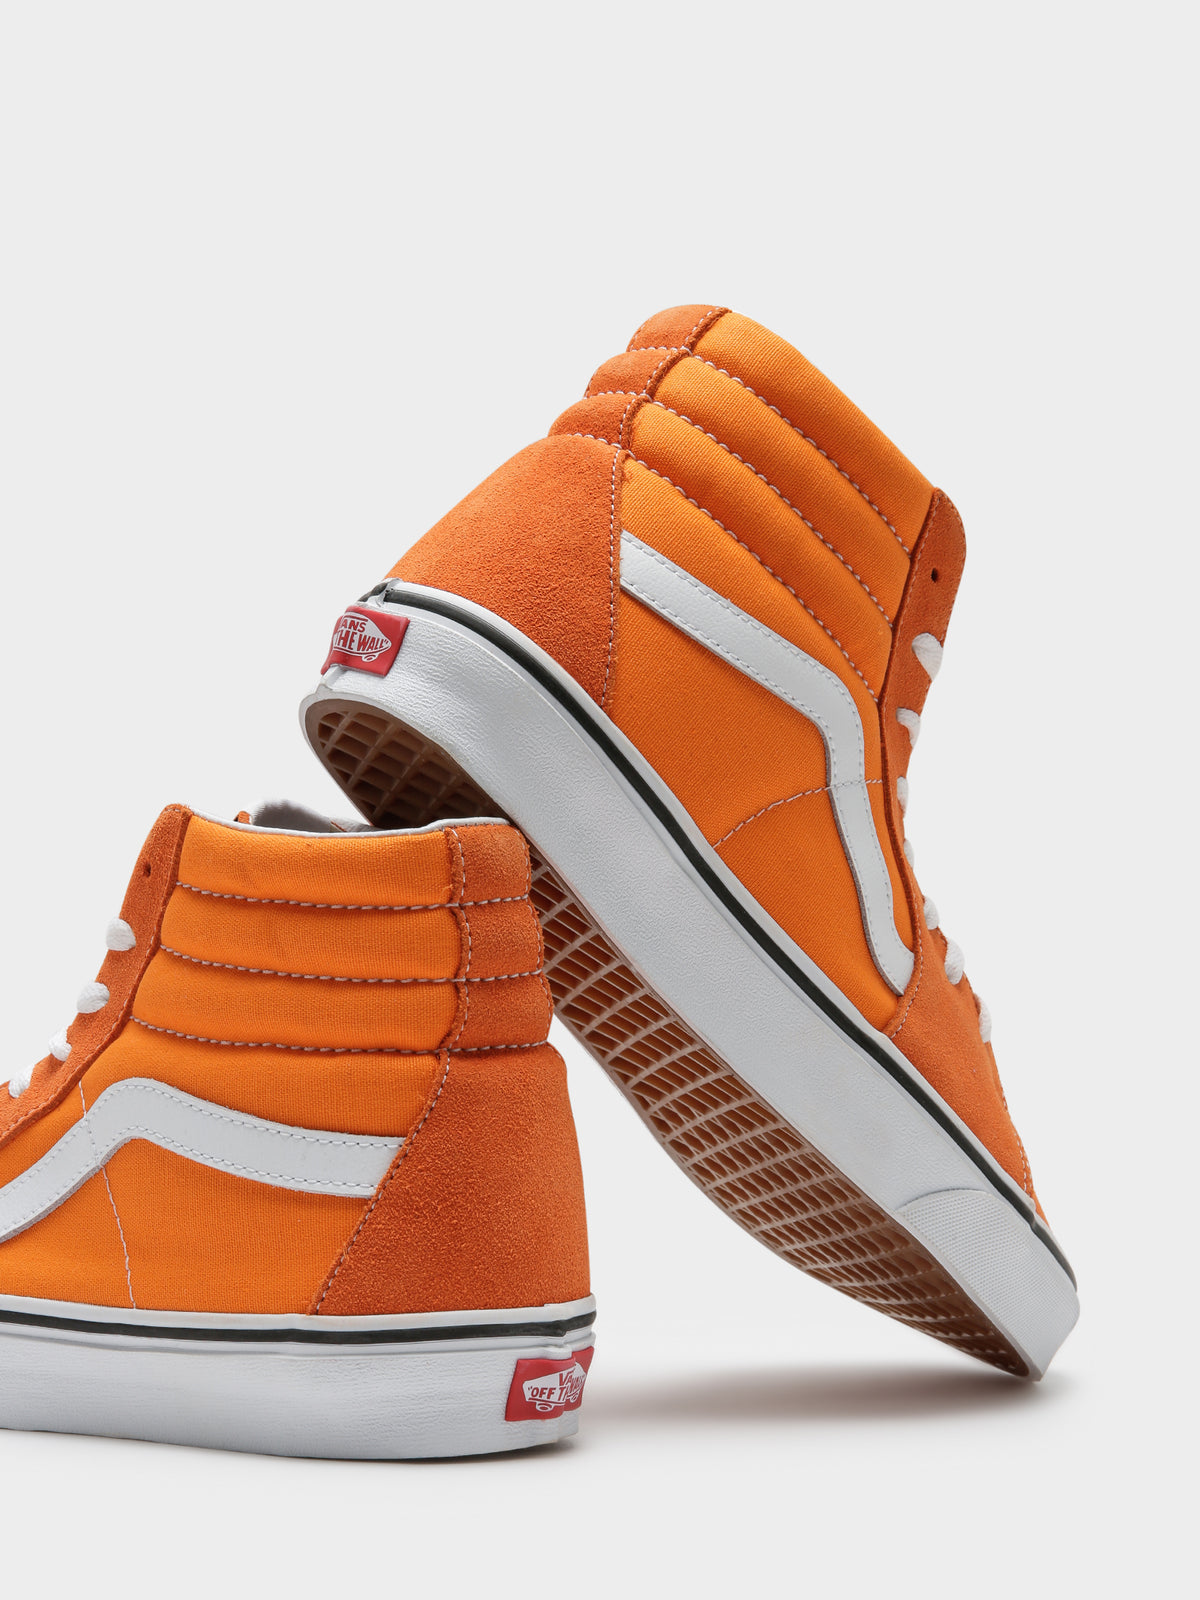 Unisex Sk8 Hi Sneakers in Orange Tiger